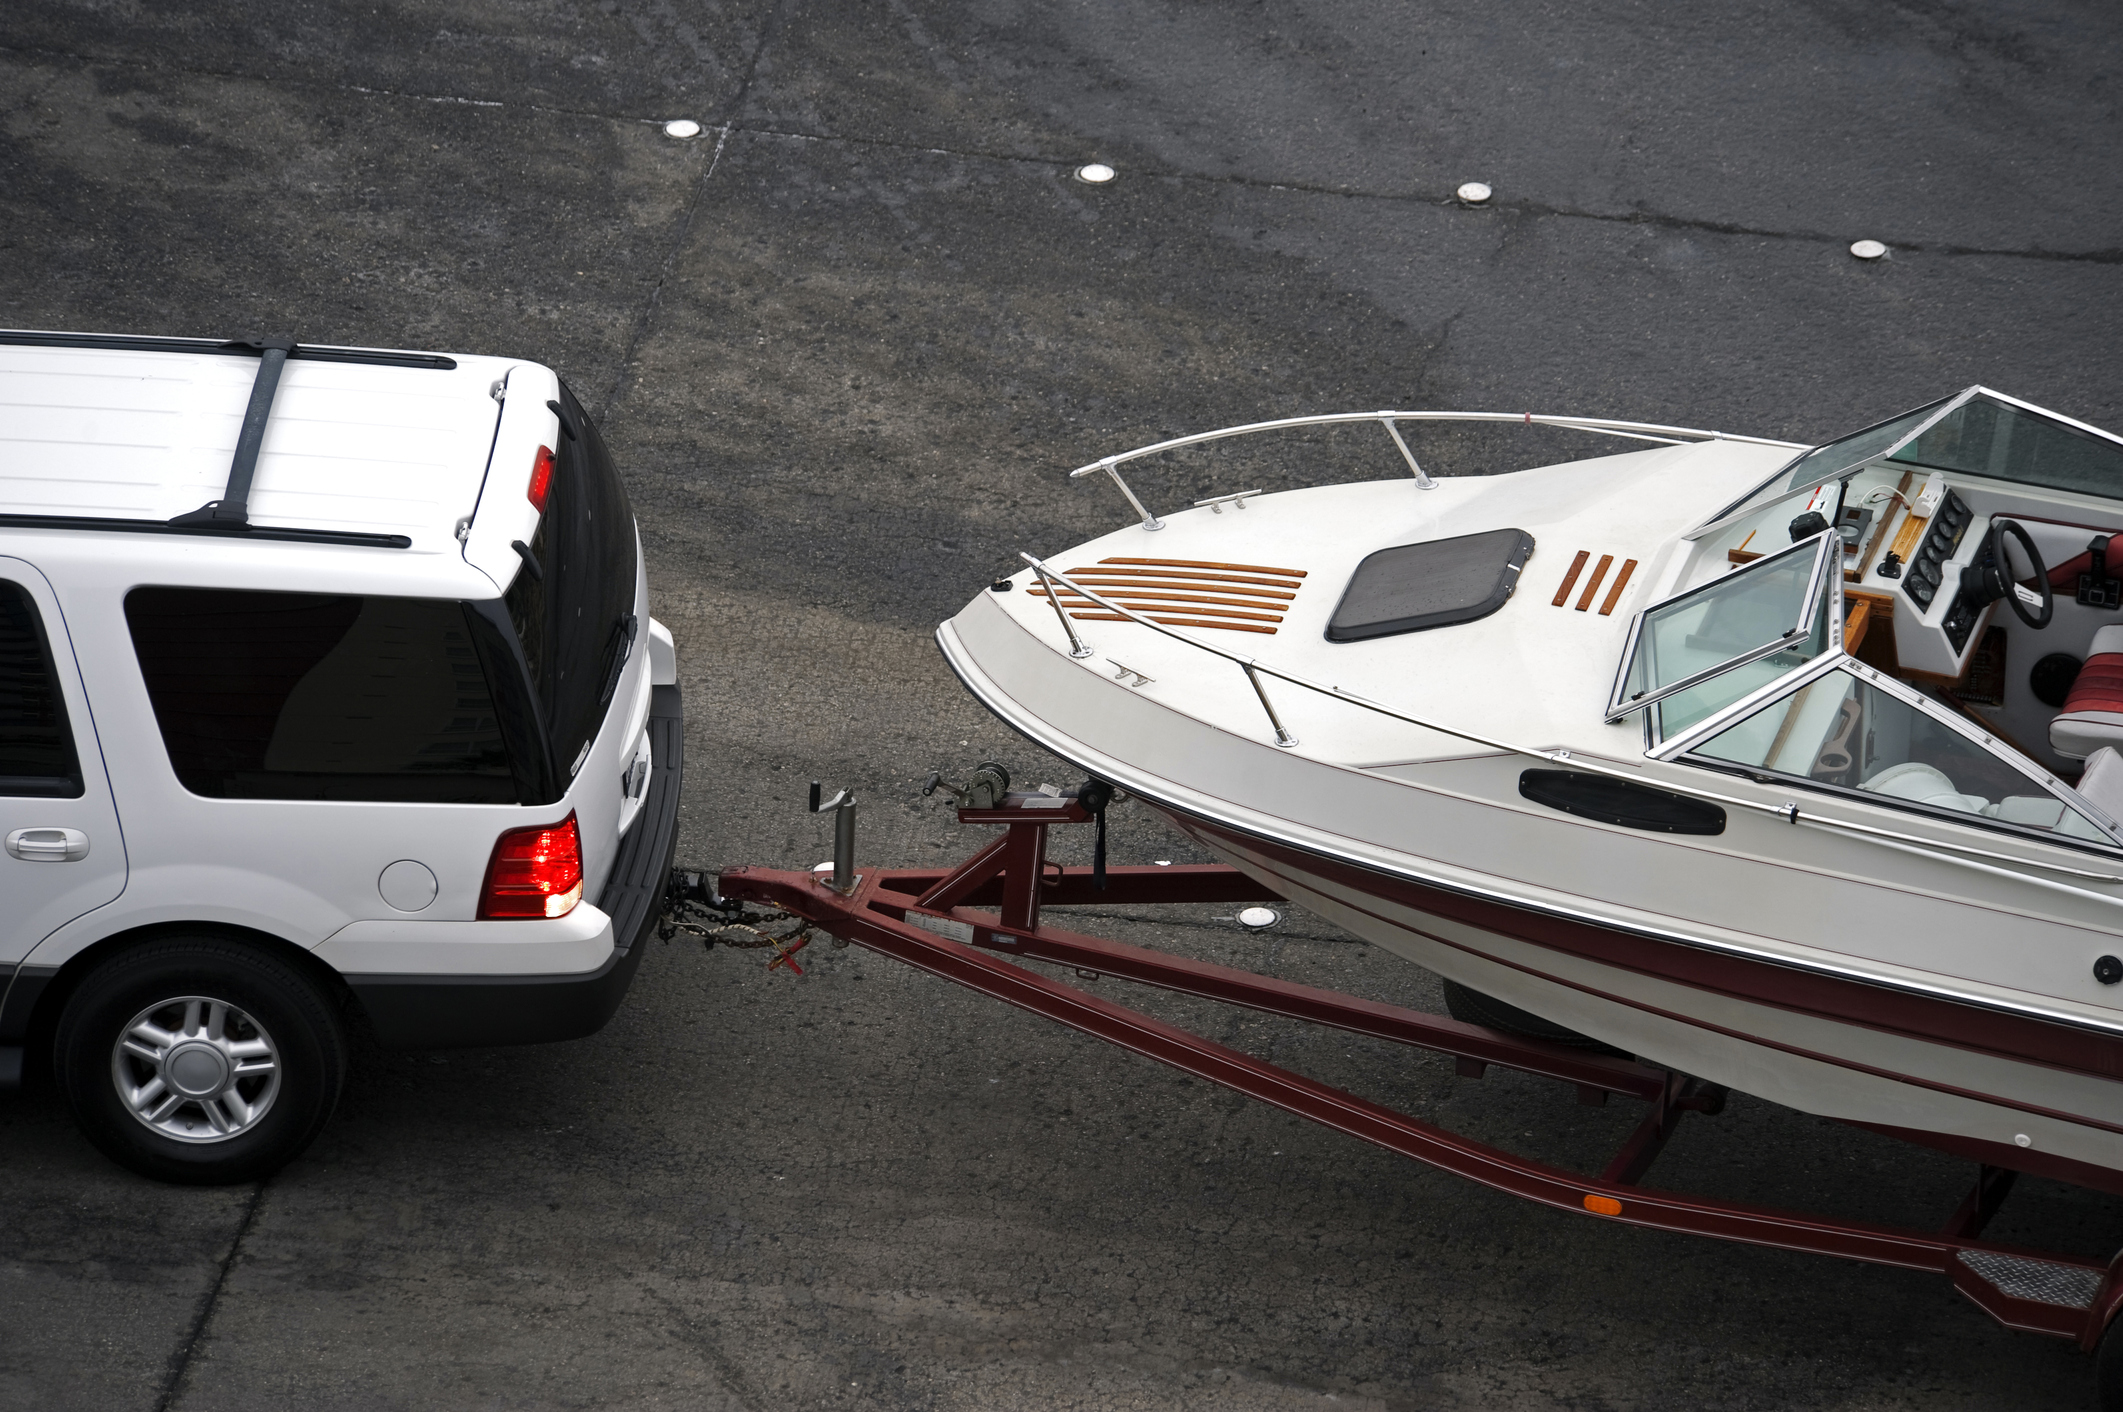 Boat Storage, SUV Towing Boat, MakeSpace Easley, South Carolina